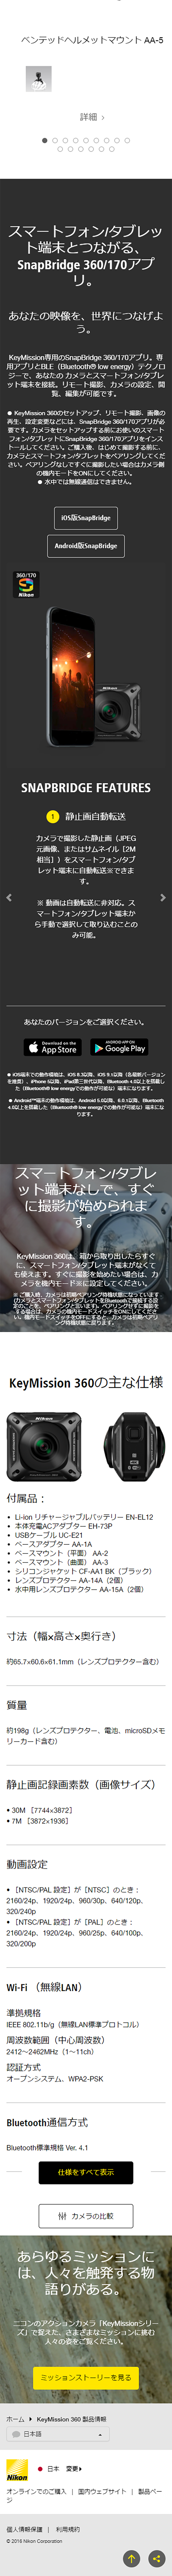 KeyMission 360_sp_2